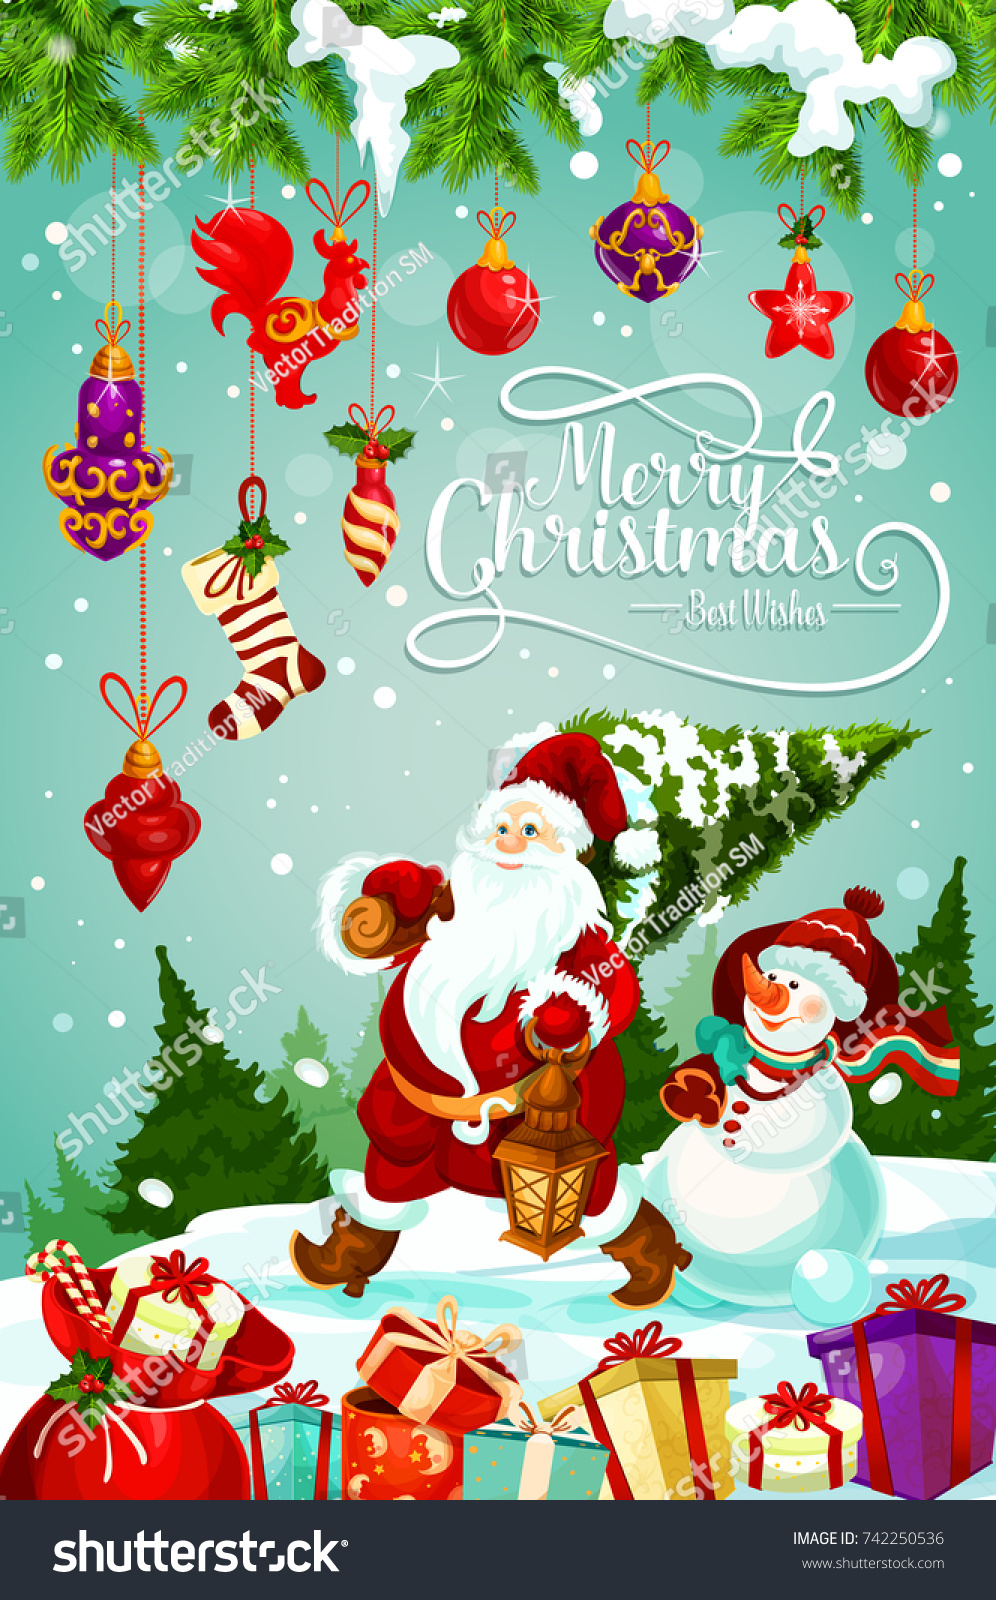 Merry Christmas Greeting Card Design Santa Stock Vector 742250536 - Shutterstock